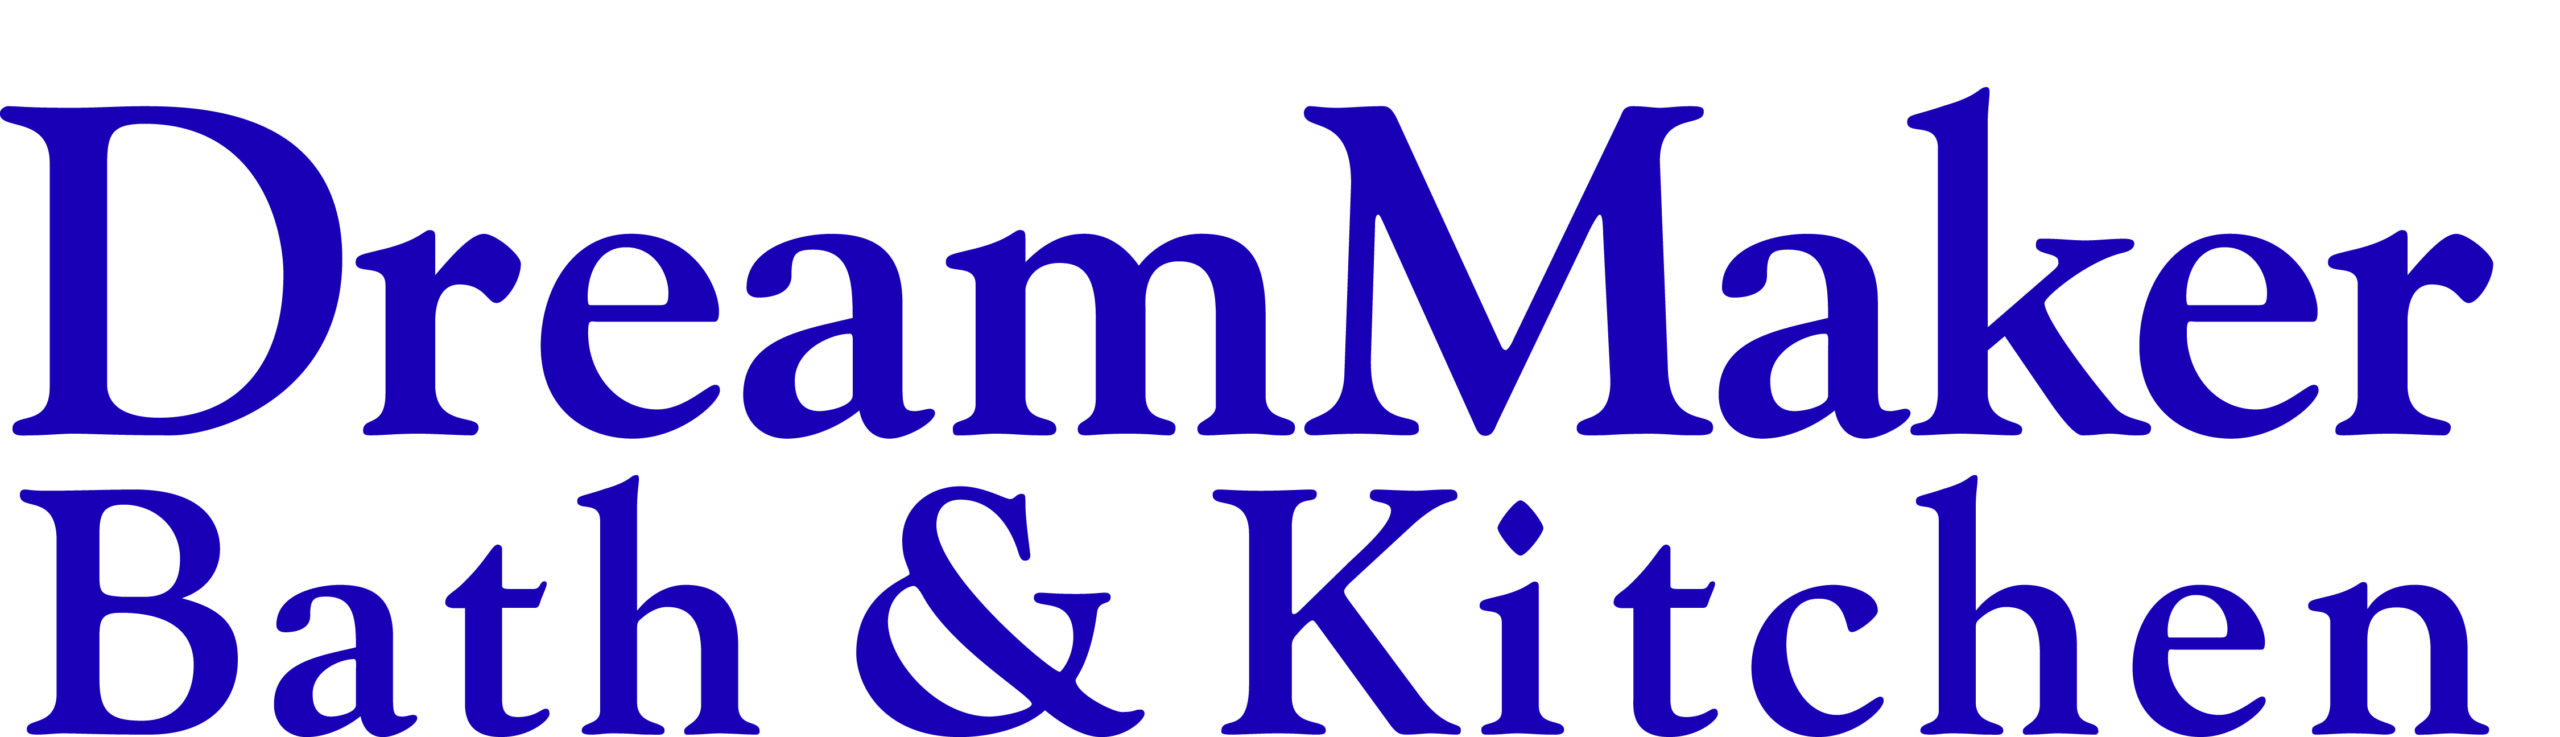 DM Logo with Skippy - No Tagline - 4 Color